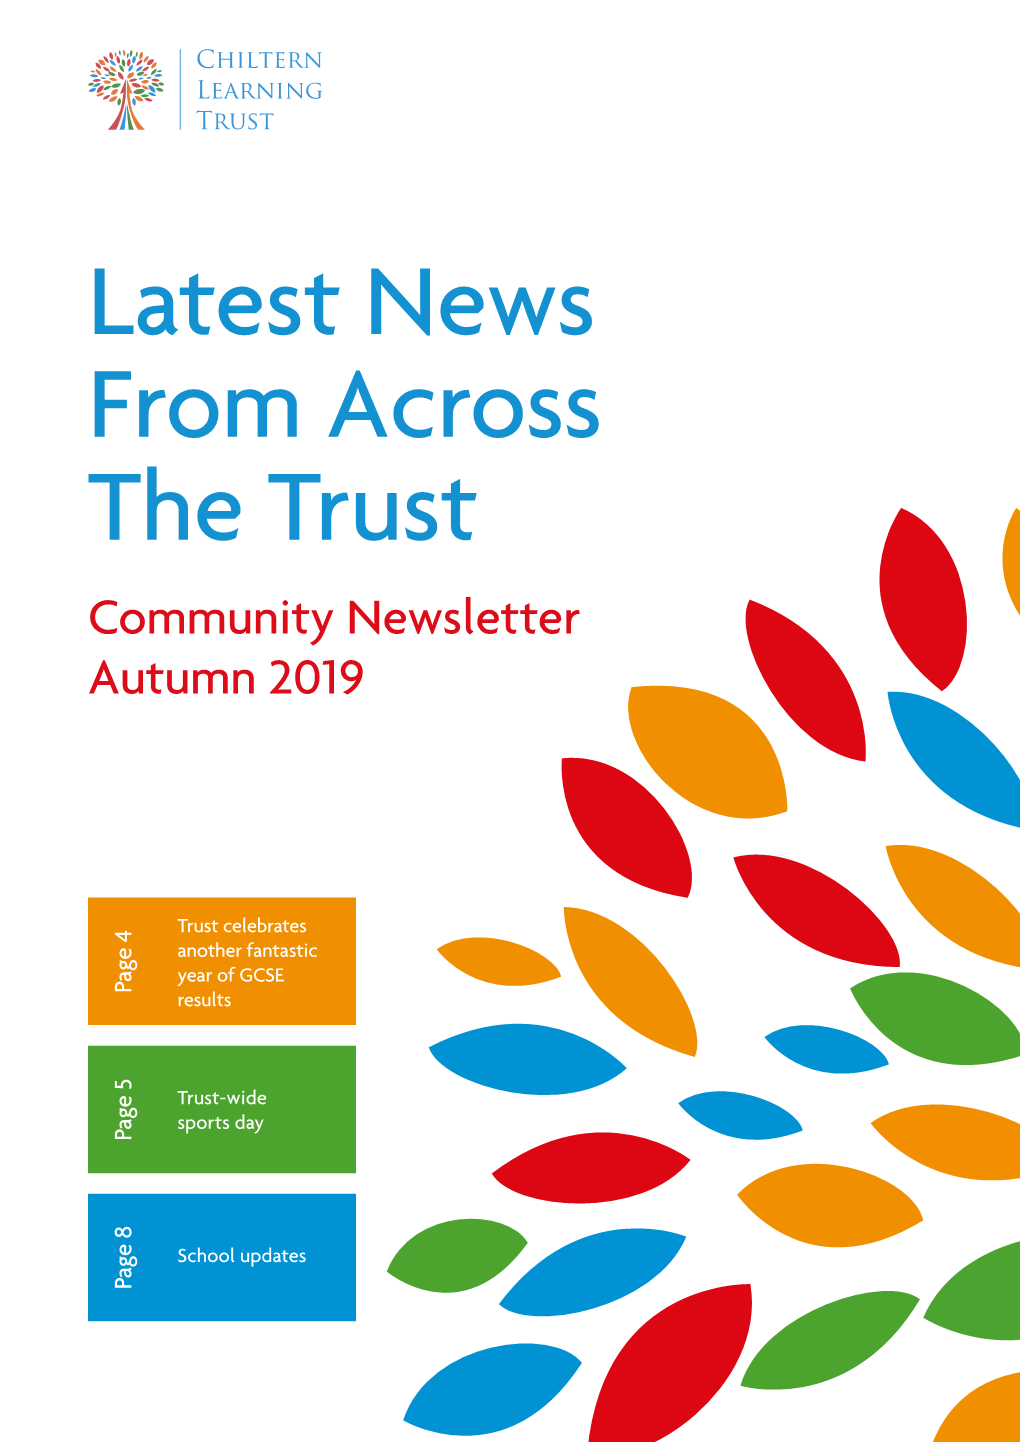 Latest News from Across the Trust Community Newsletter Autumn 2019